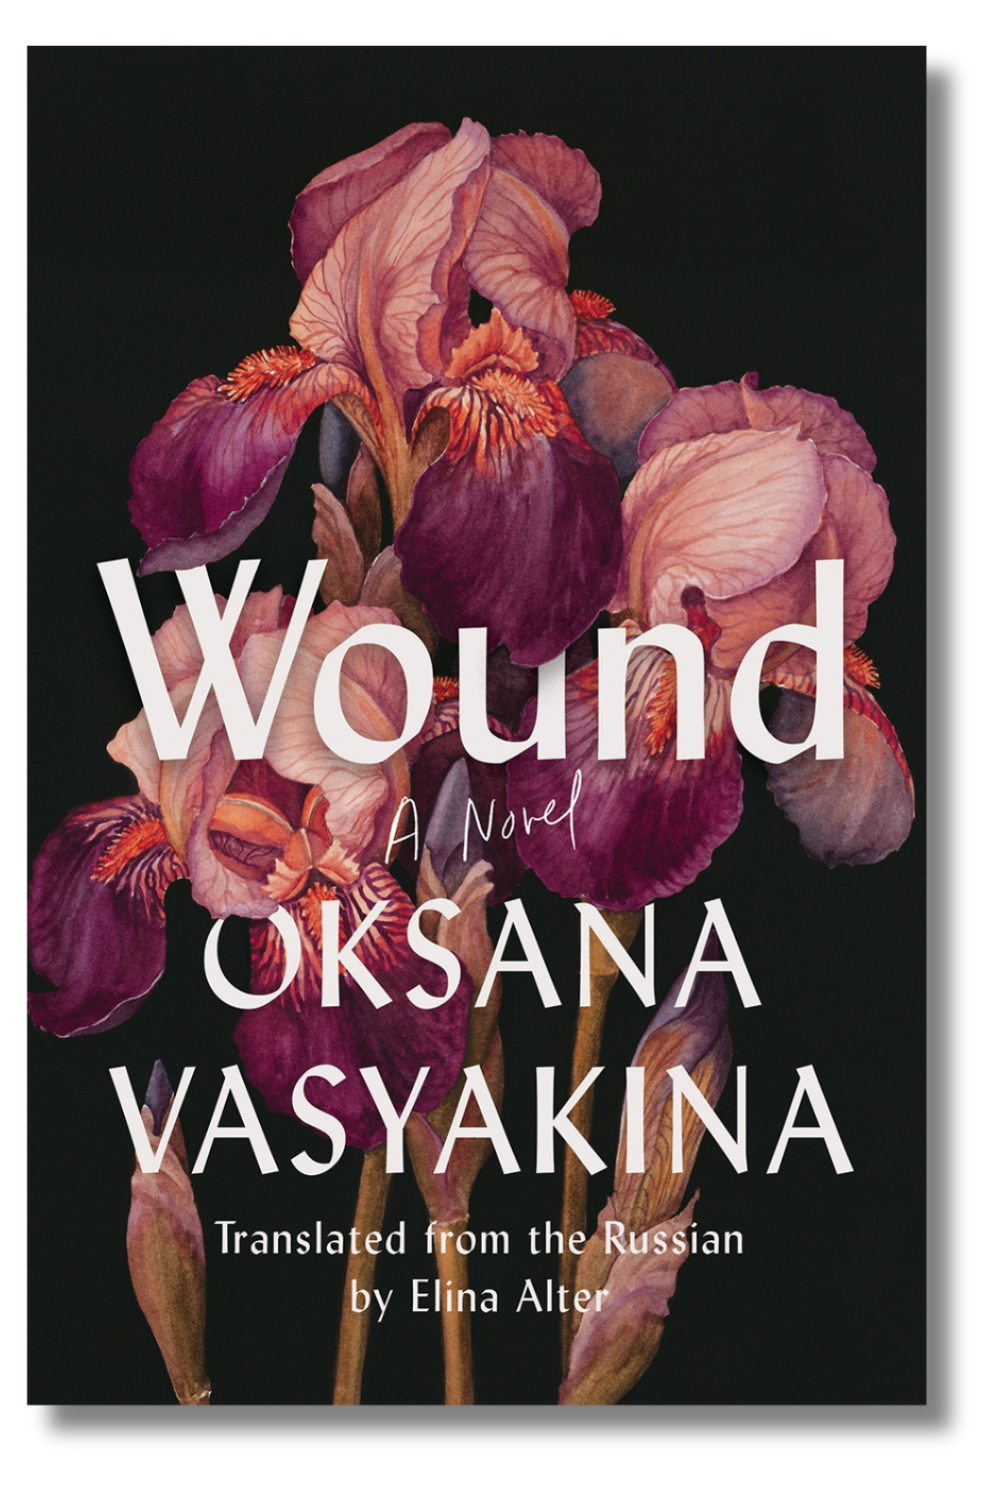 The cover of "Wound" by Oksana Vasyakina, translated by Elina Alter